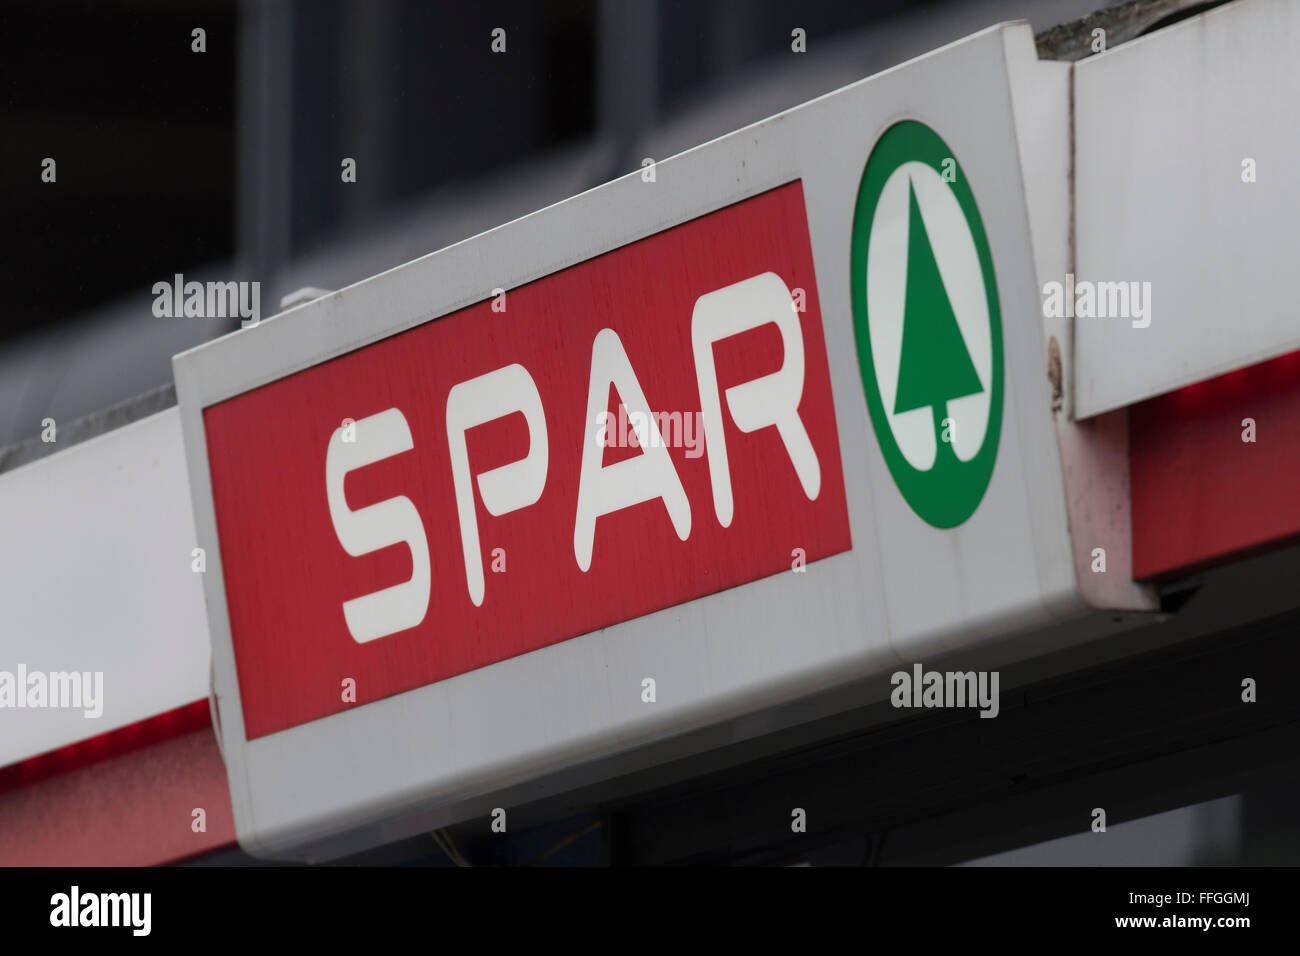 Spar convenience store sign logo. Stock Photo